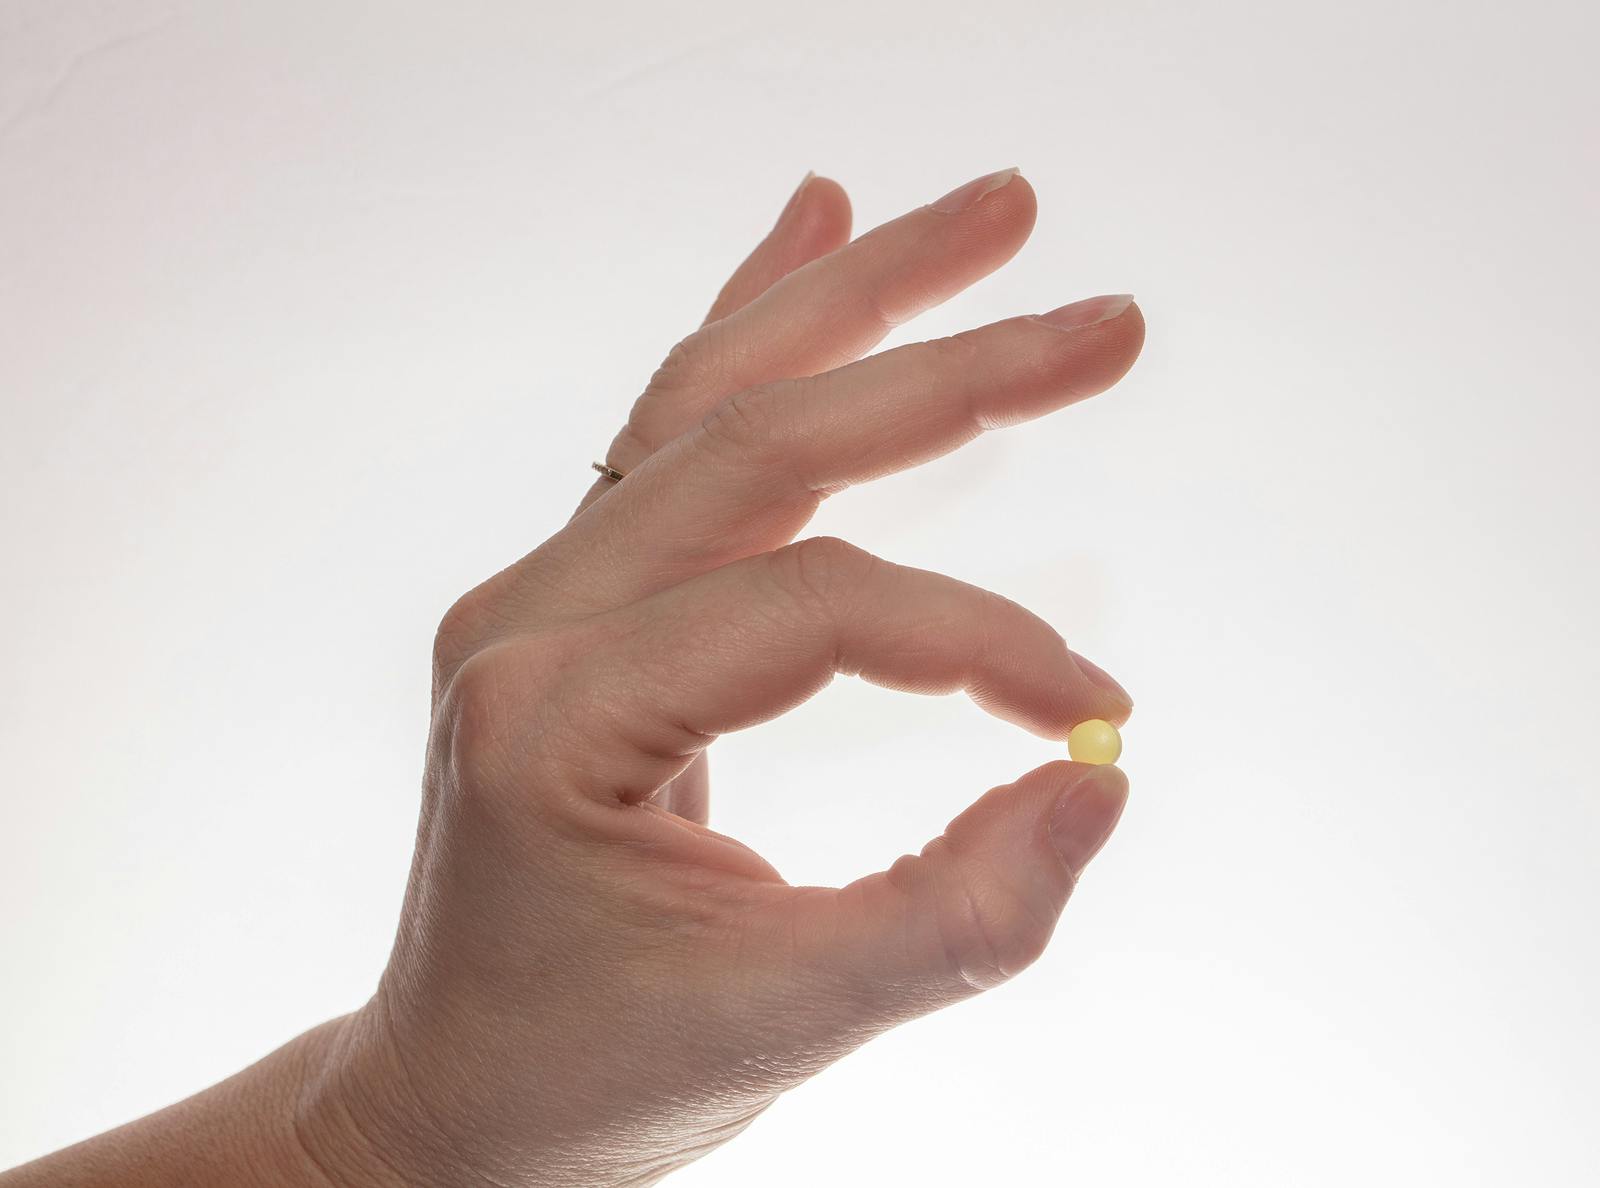 Hand holding up a single baby aspirin